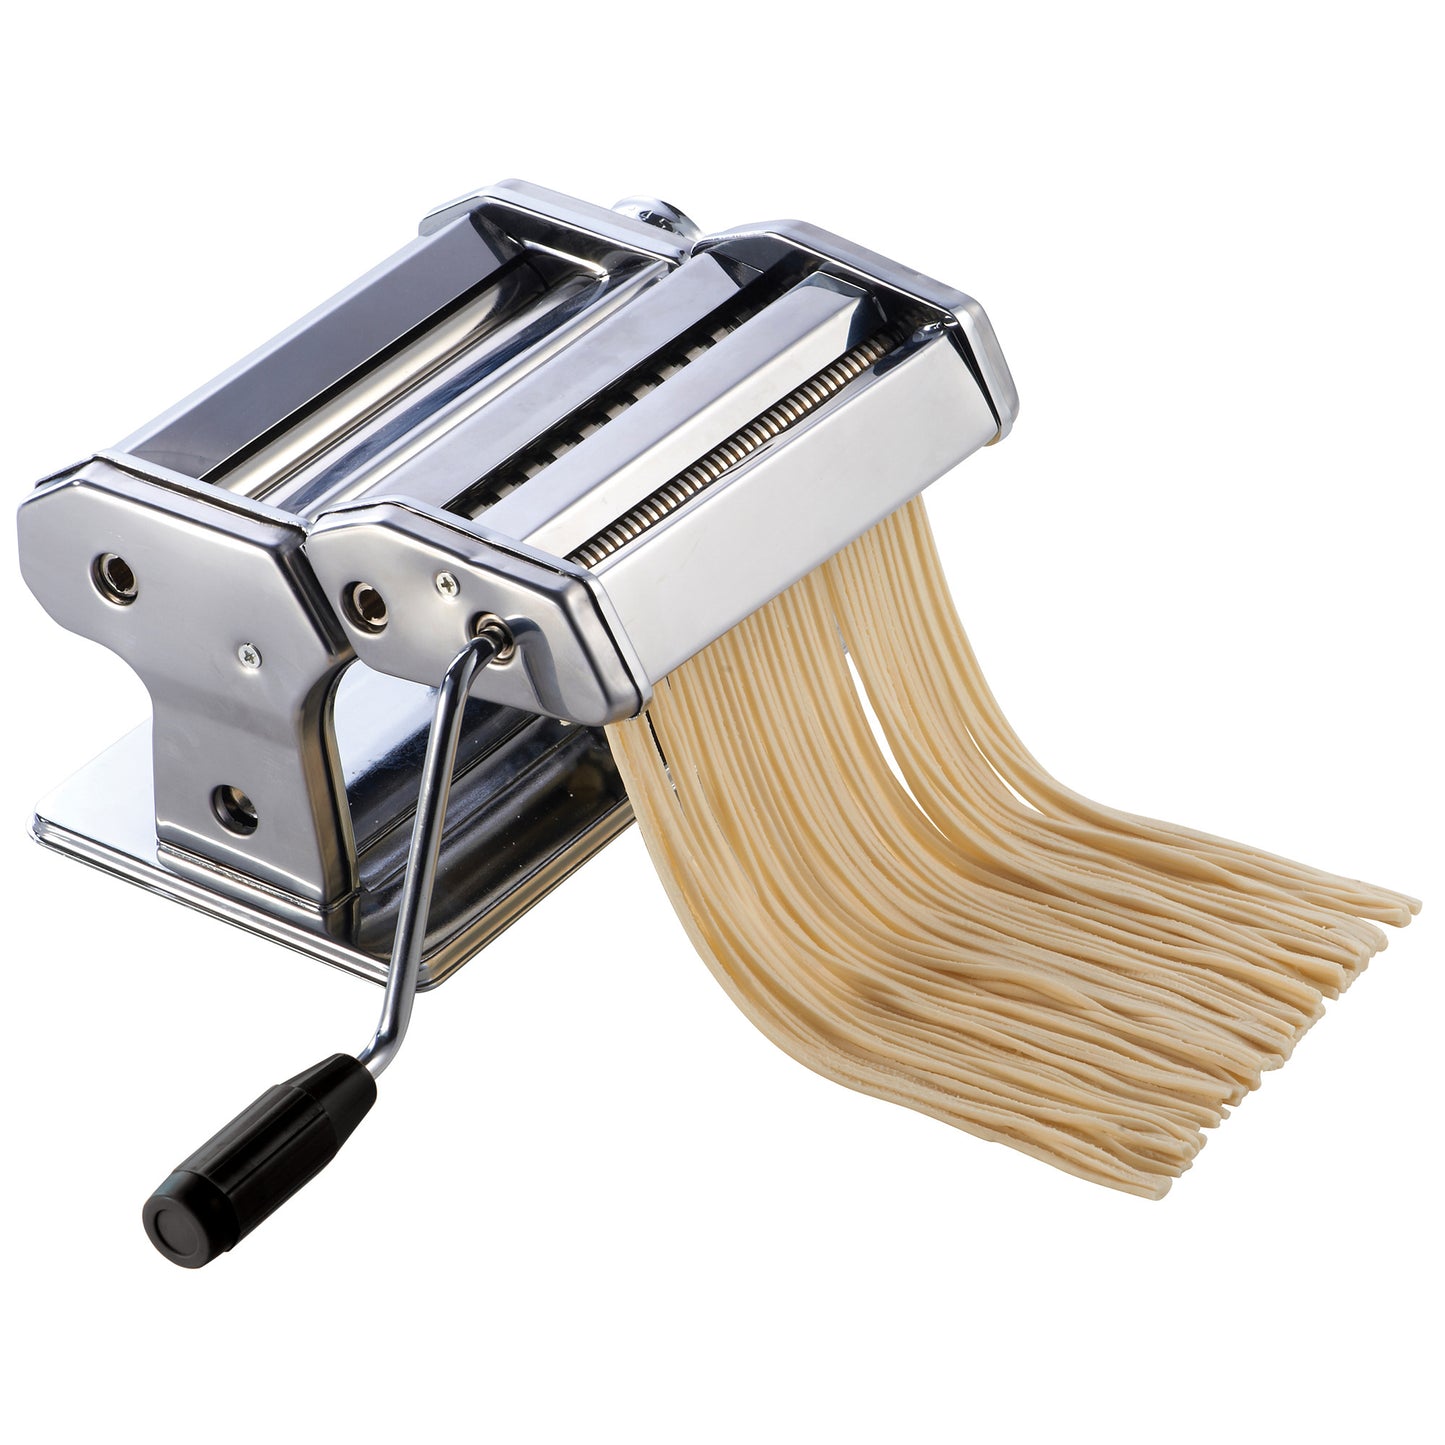 NPM-7 - Pasta Maker with Detachable Cutter